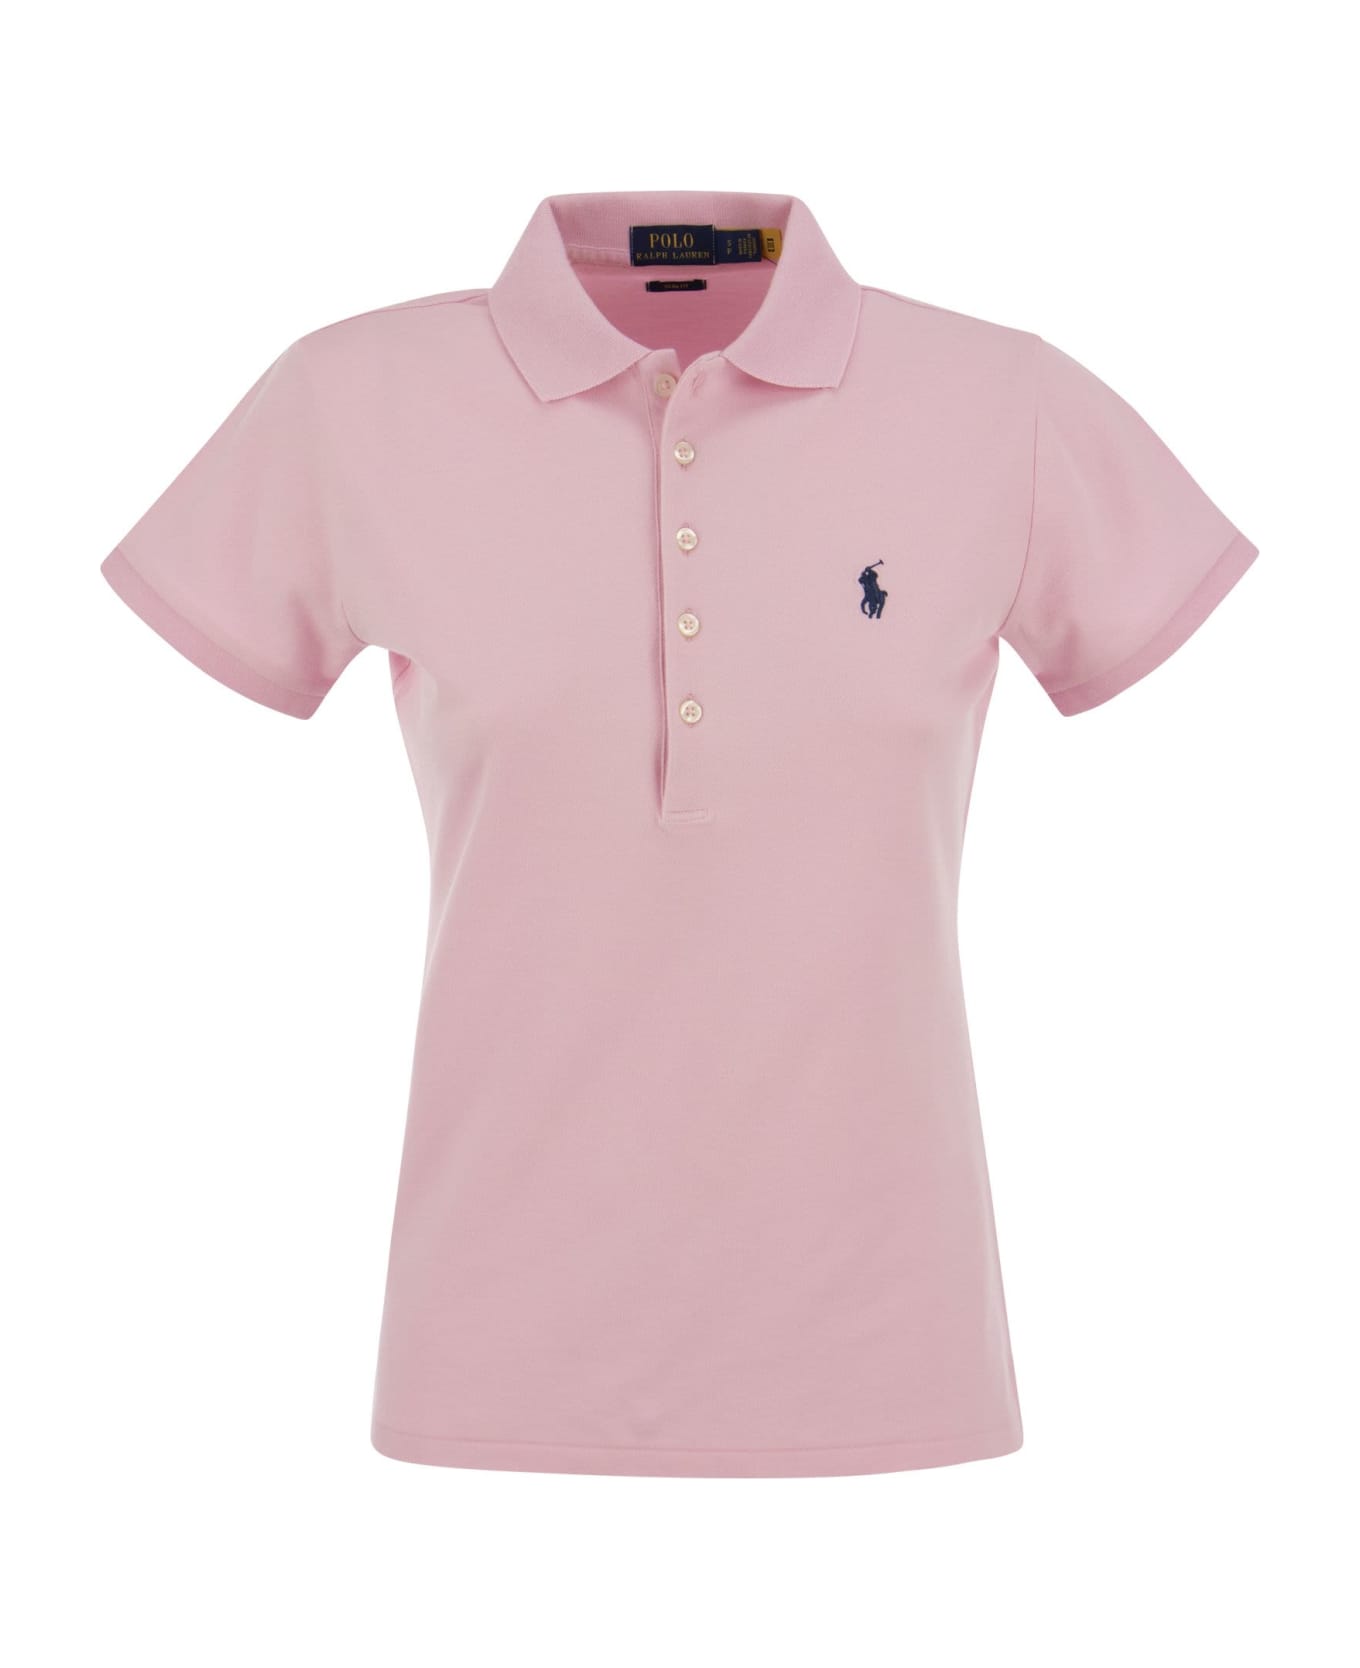 Polo Ralph Lauren Pony Polo Shirt - Pink ポロシャツ